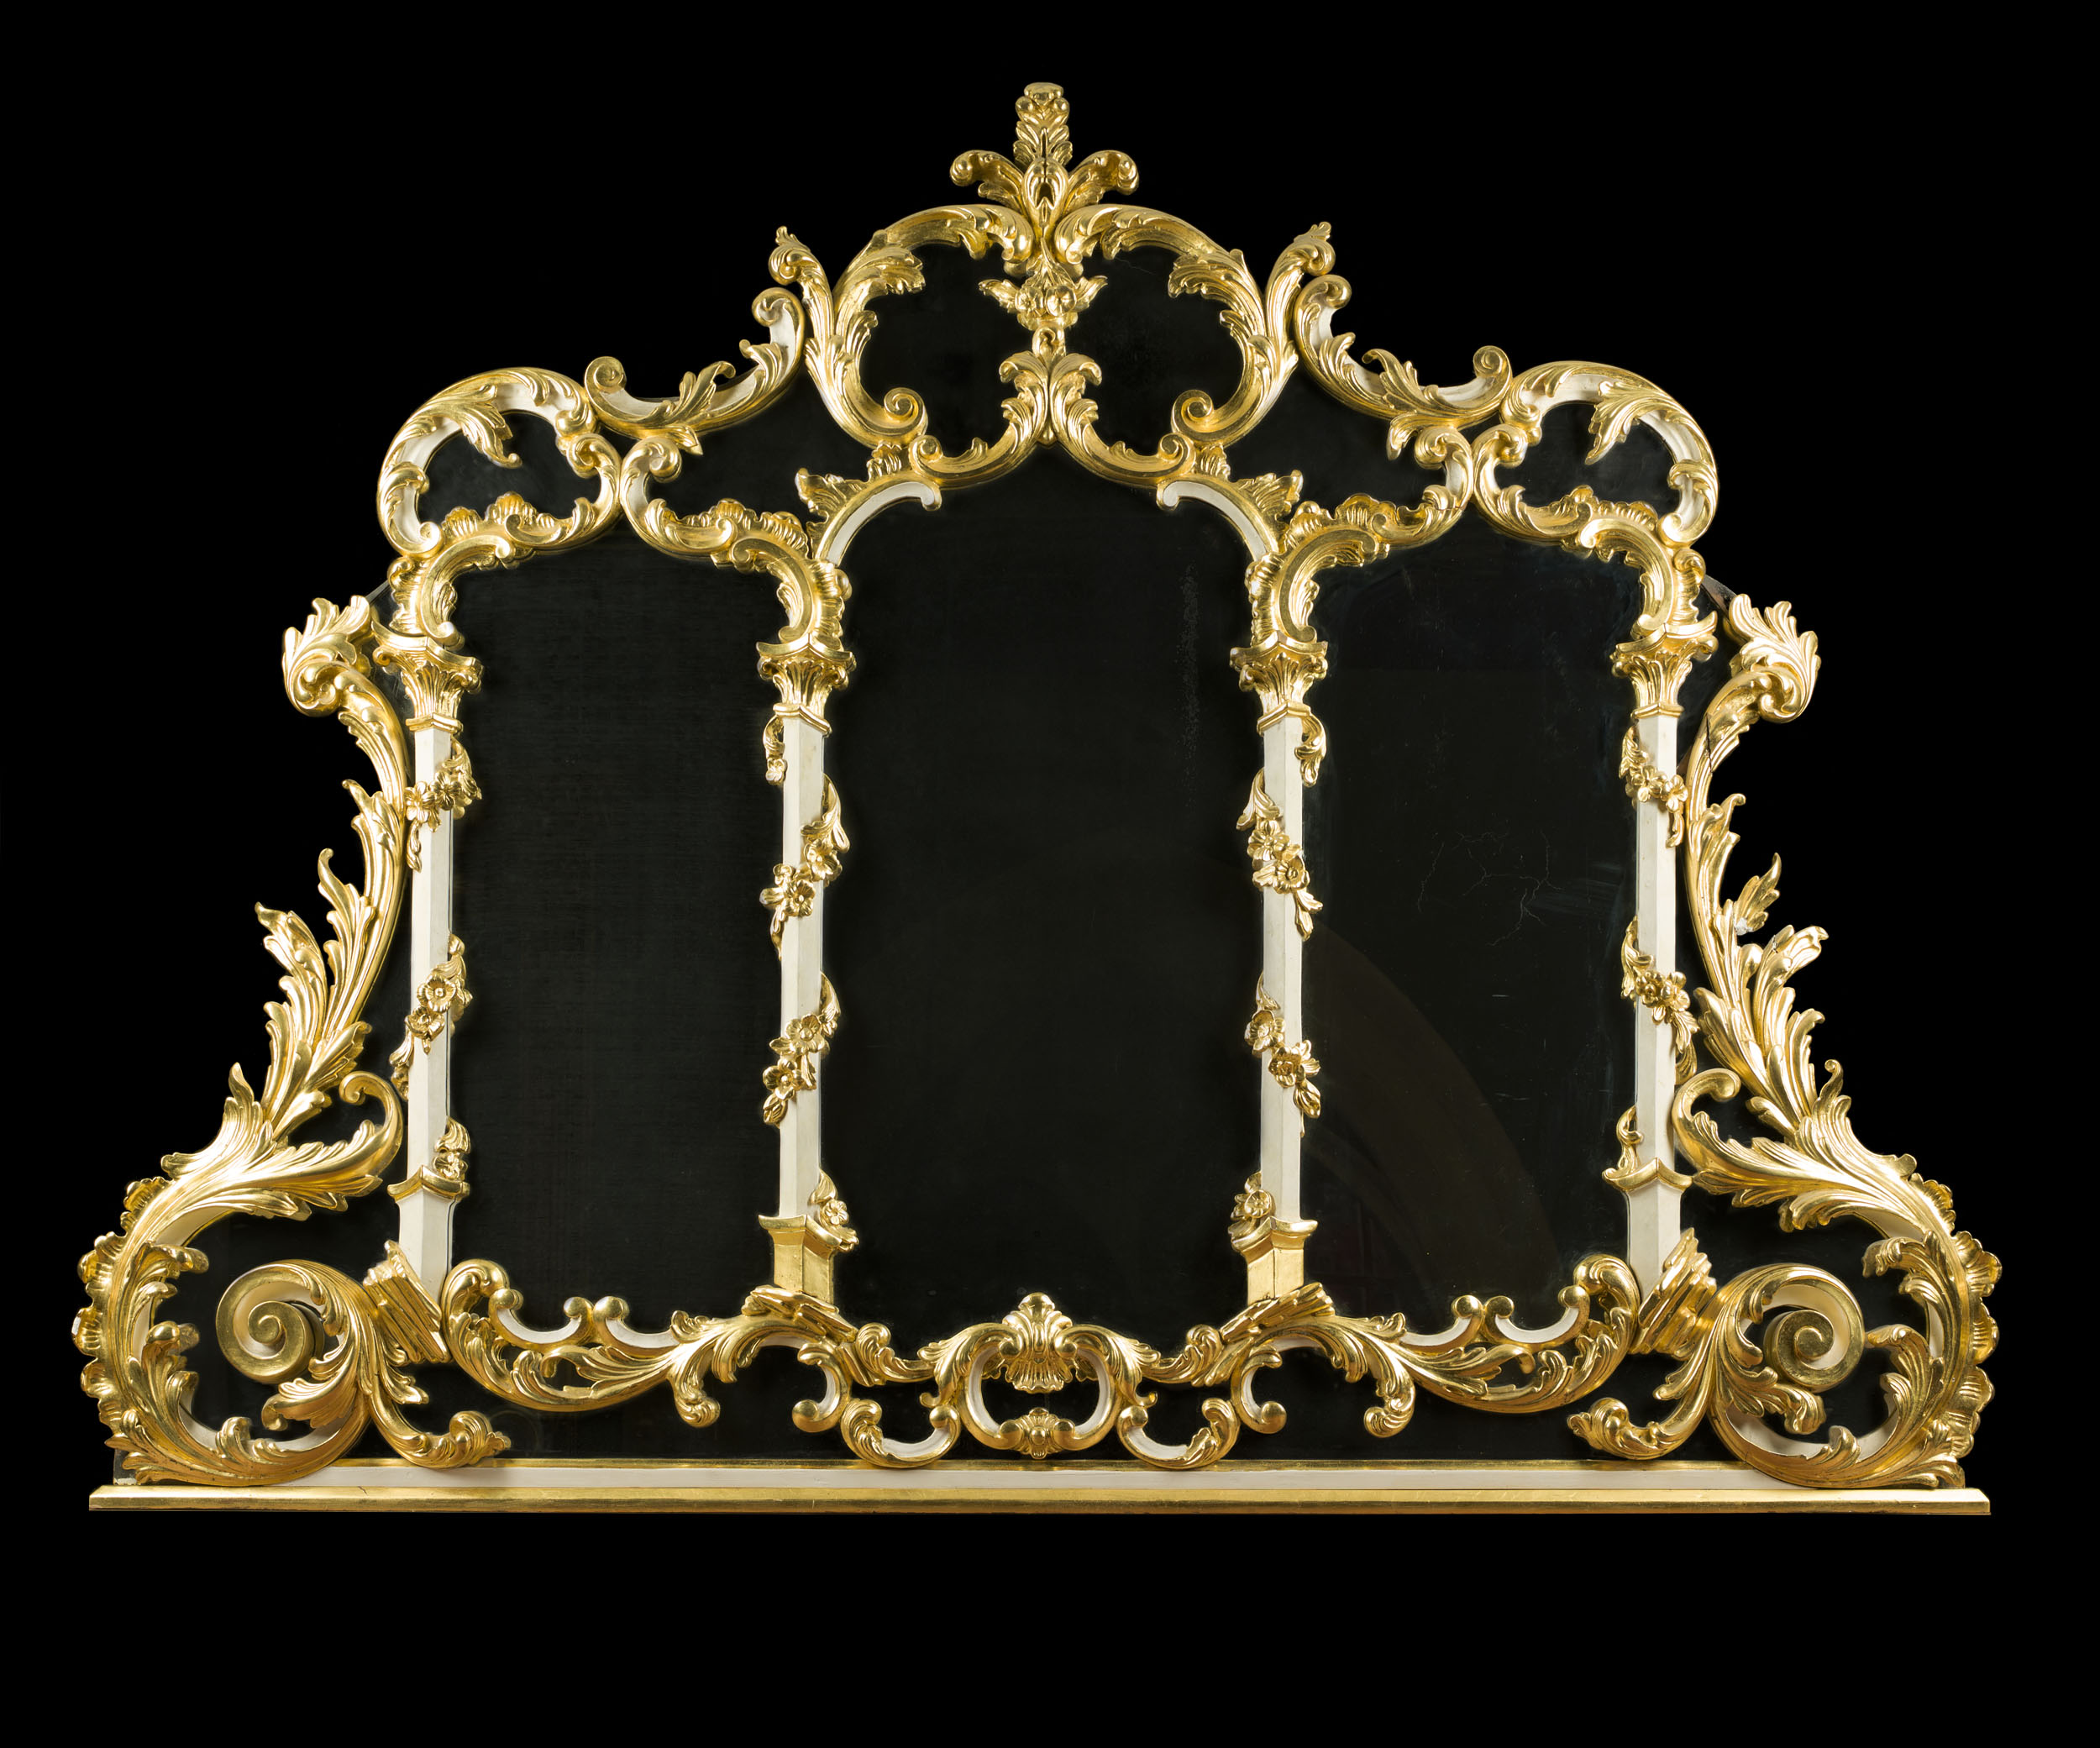 A Large Rococo Revival Overmantel Mirror